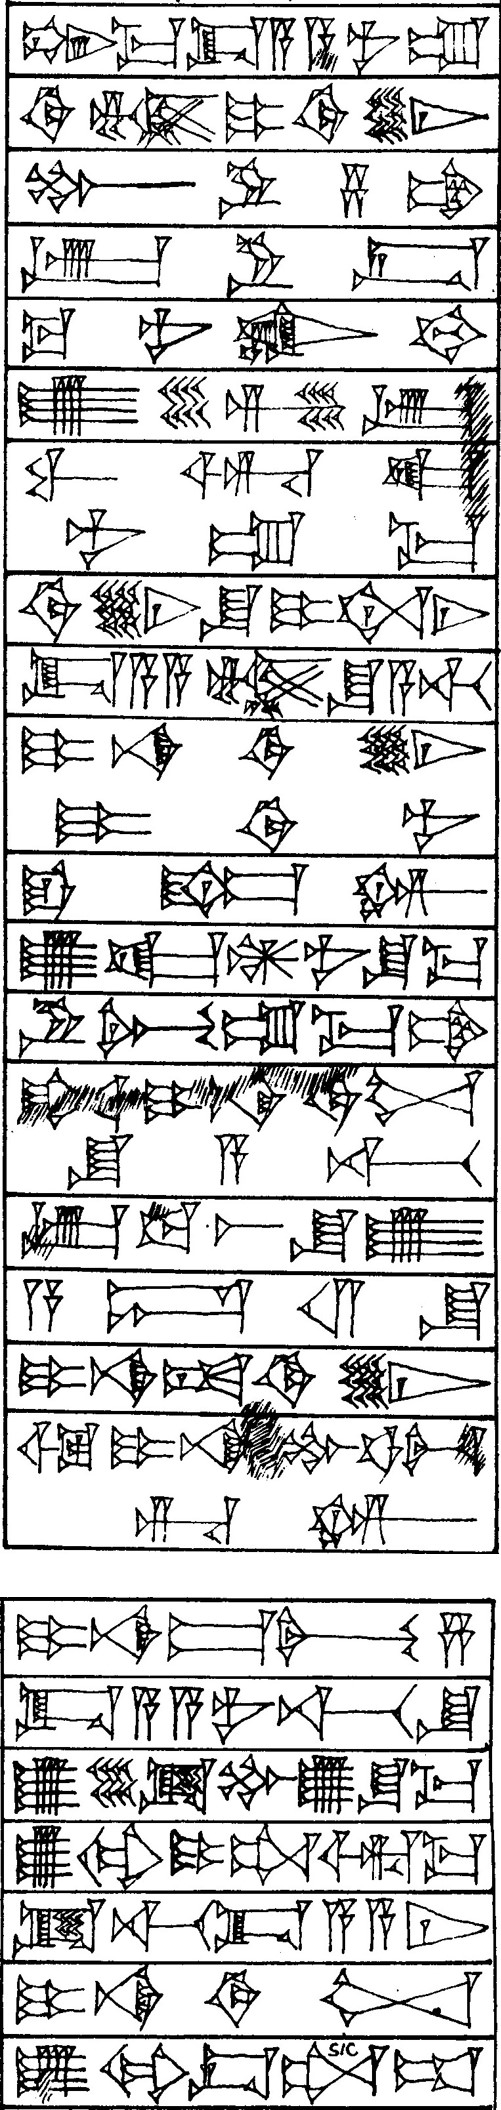 Law § 5 - Cuneiform - Law Code of Hammurabi